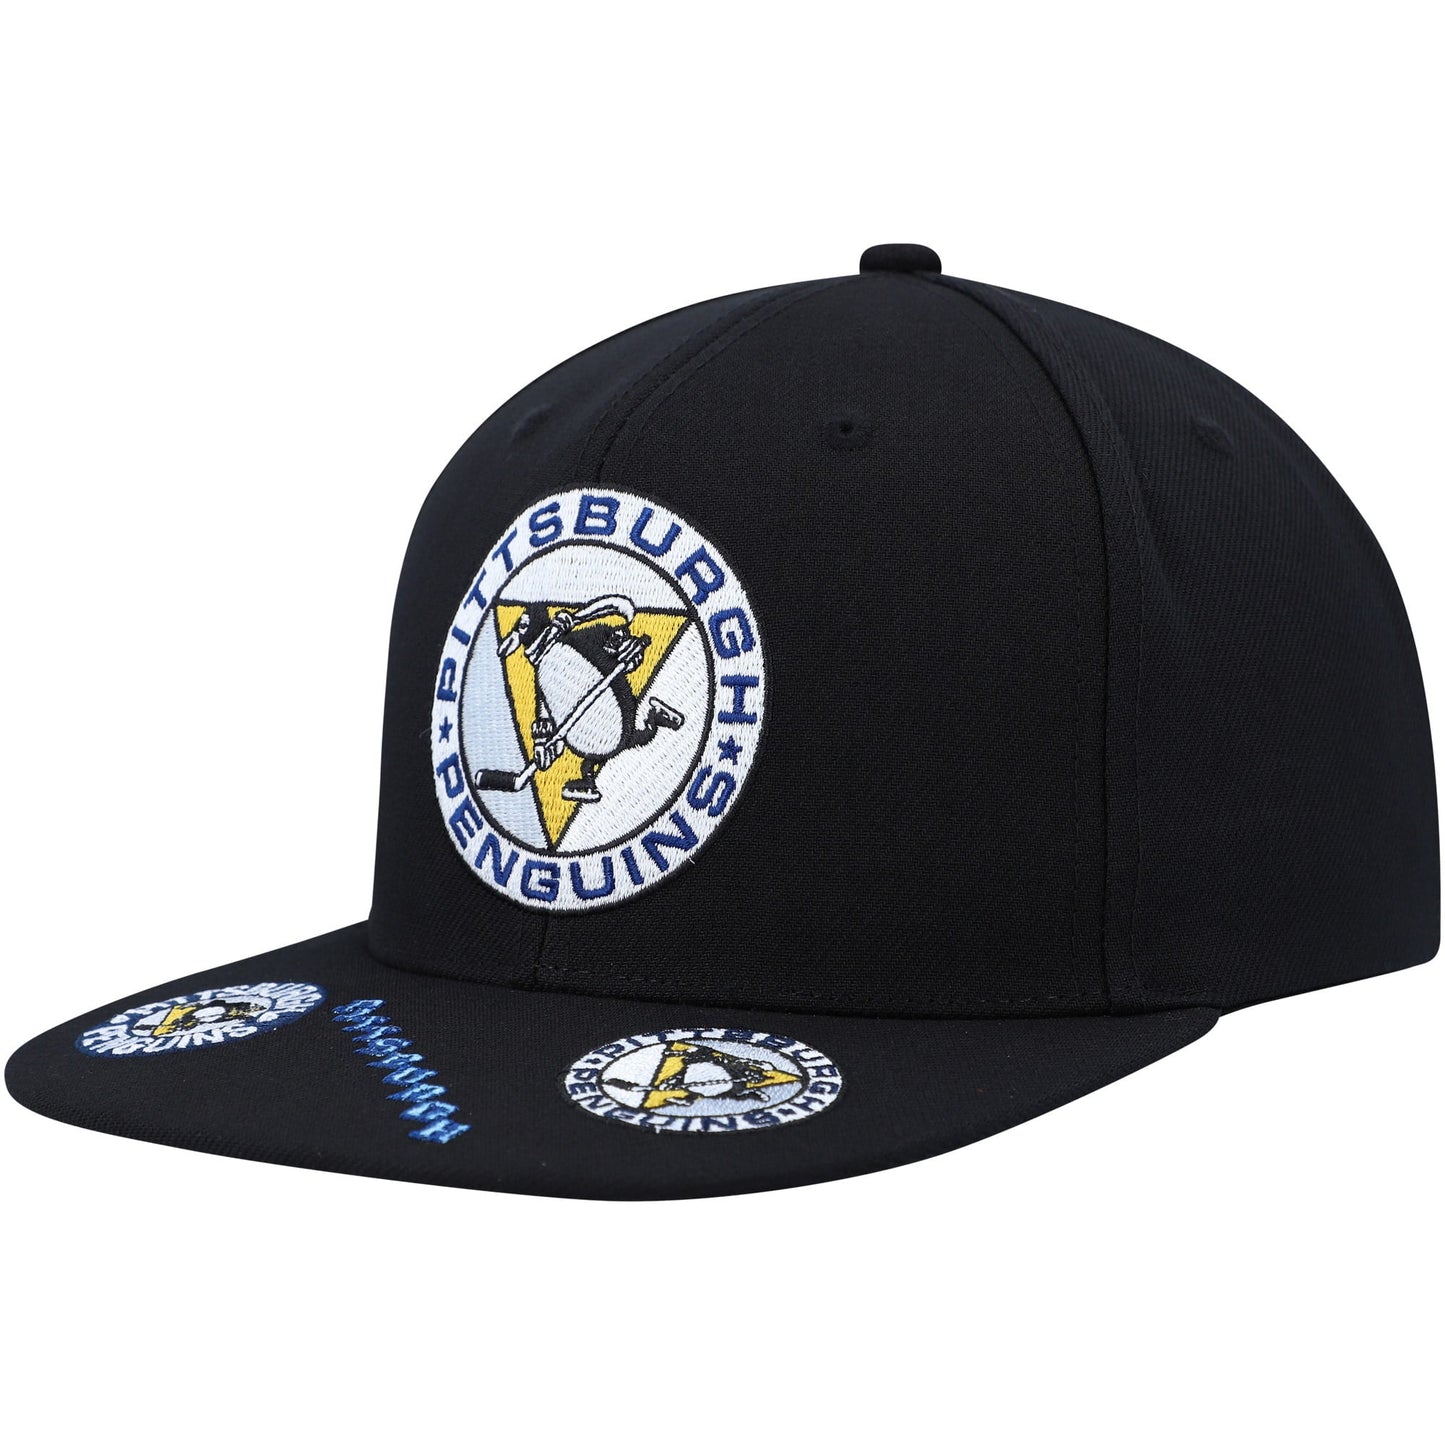 Men's Mitchell & Ness Black Pittsburgh Penguins Vintage Hat Trick Snapback Hat - OSFA